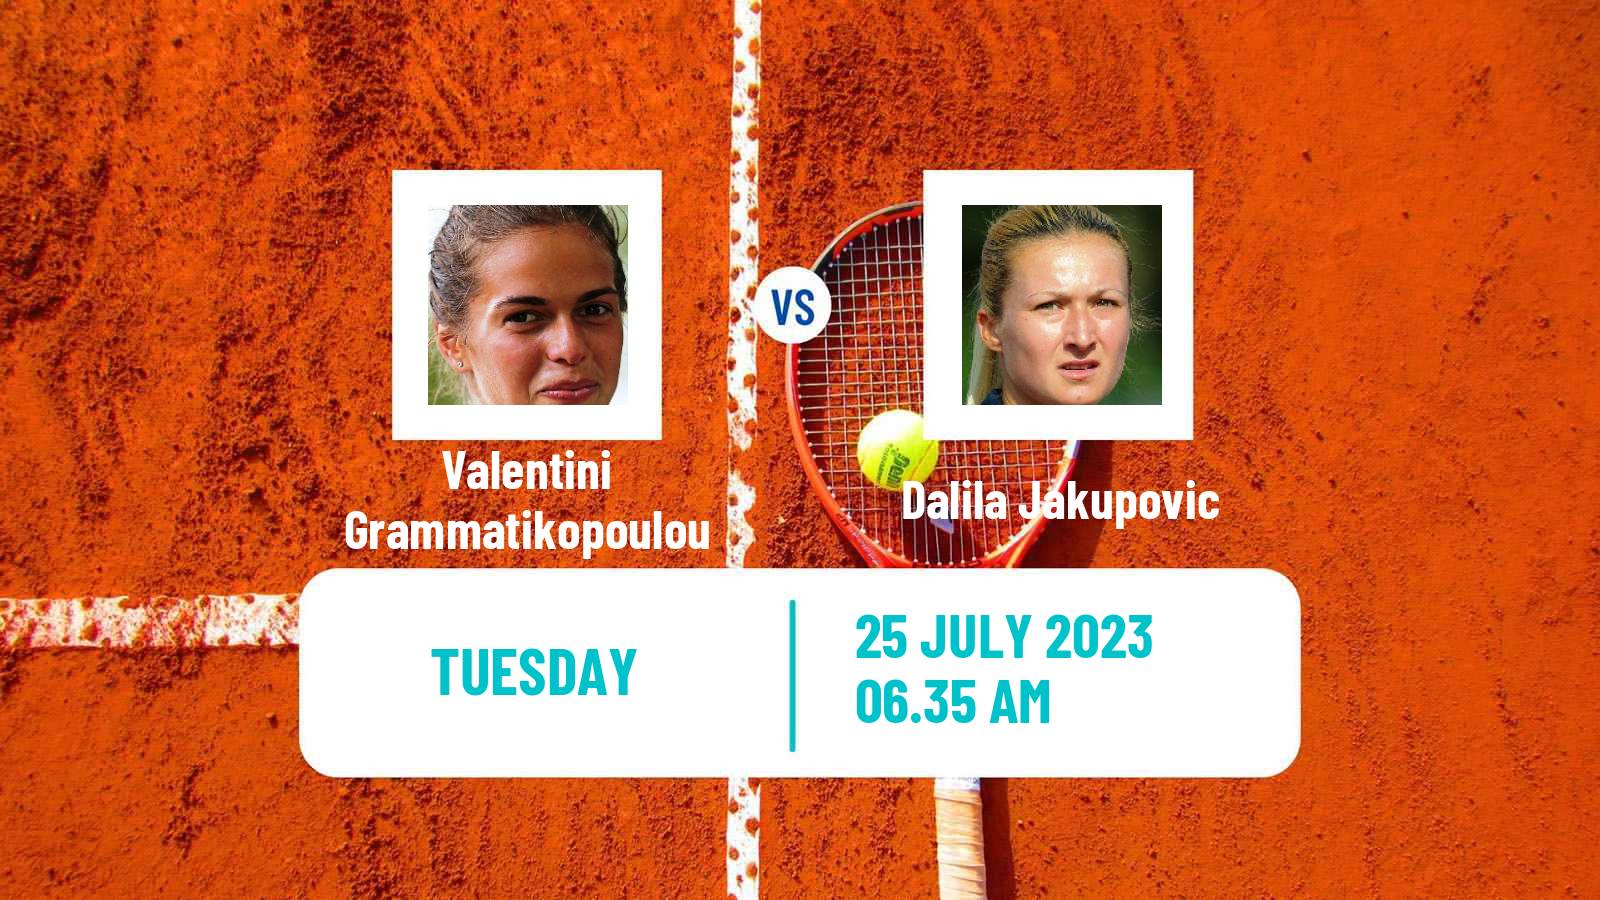 Tennis WTA Lausanne Valentini Grammatikopoulou - Dalila Jakupovic